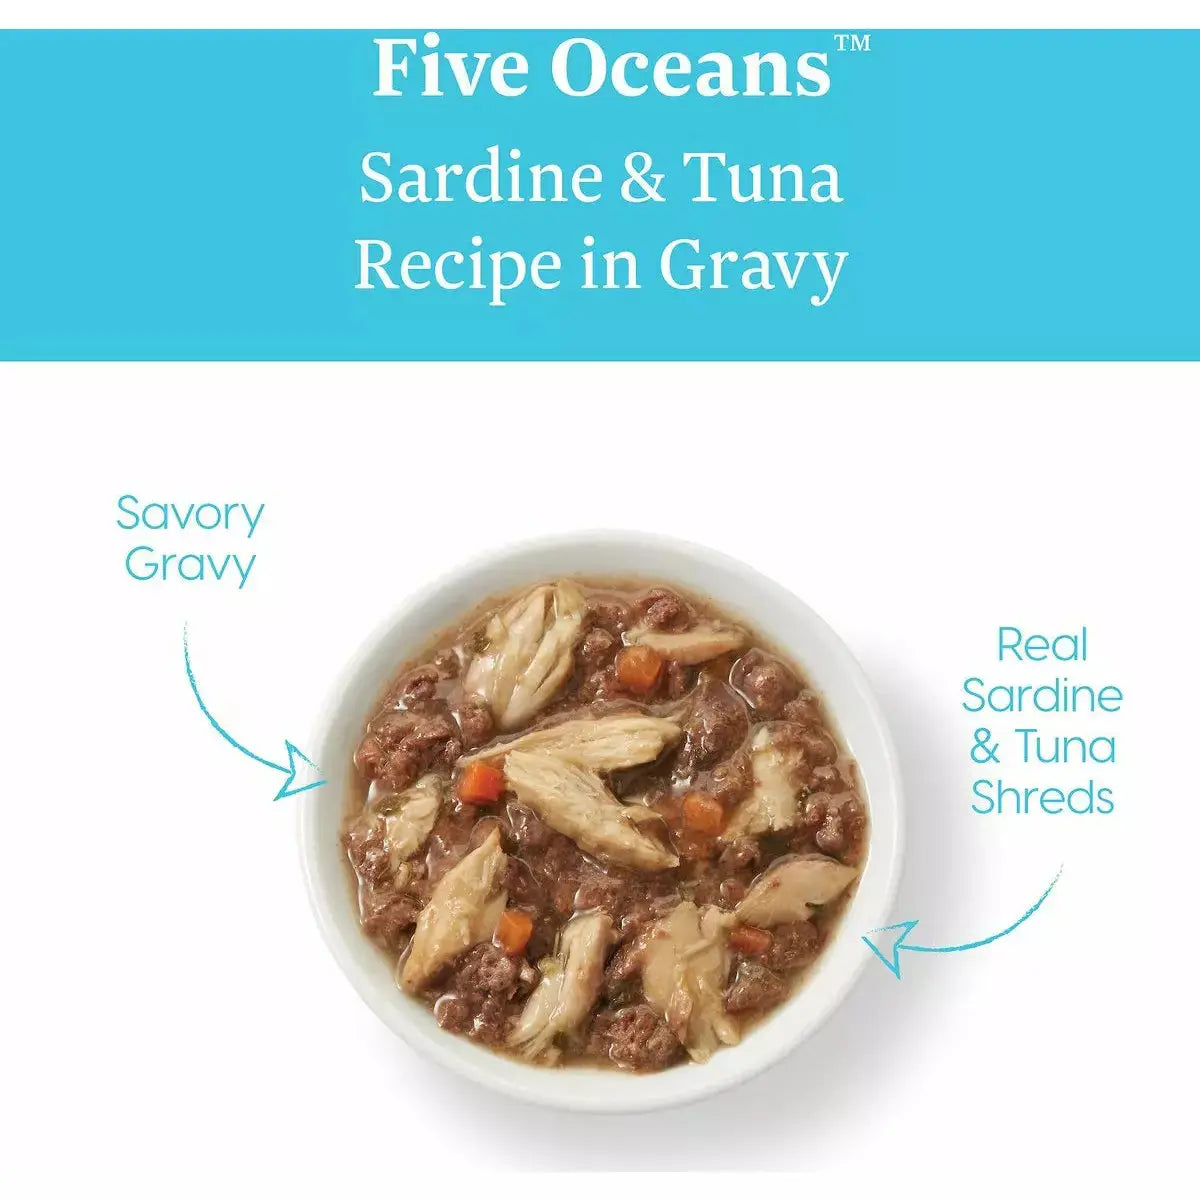 Solid Gold® Five Oceans Grain Free Sardine & Tuna Recipe in Gravy Cat Food Solid Gold